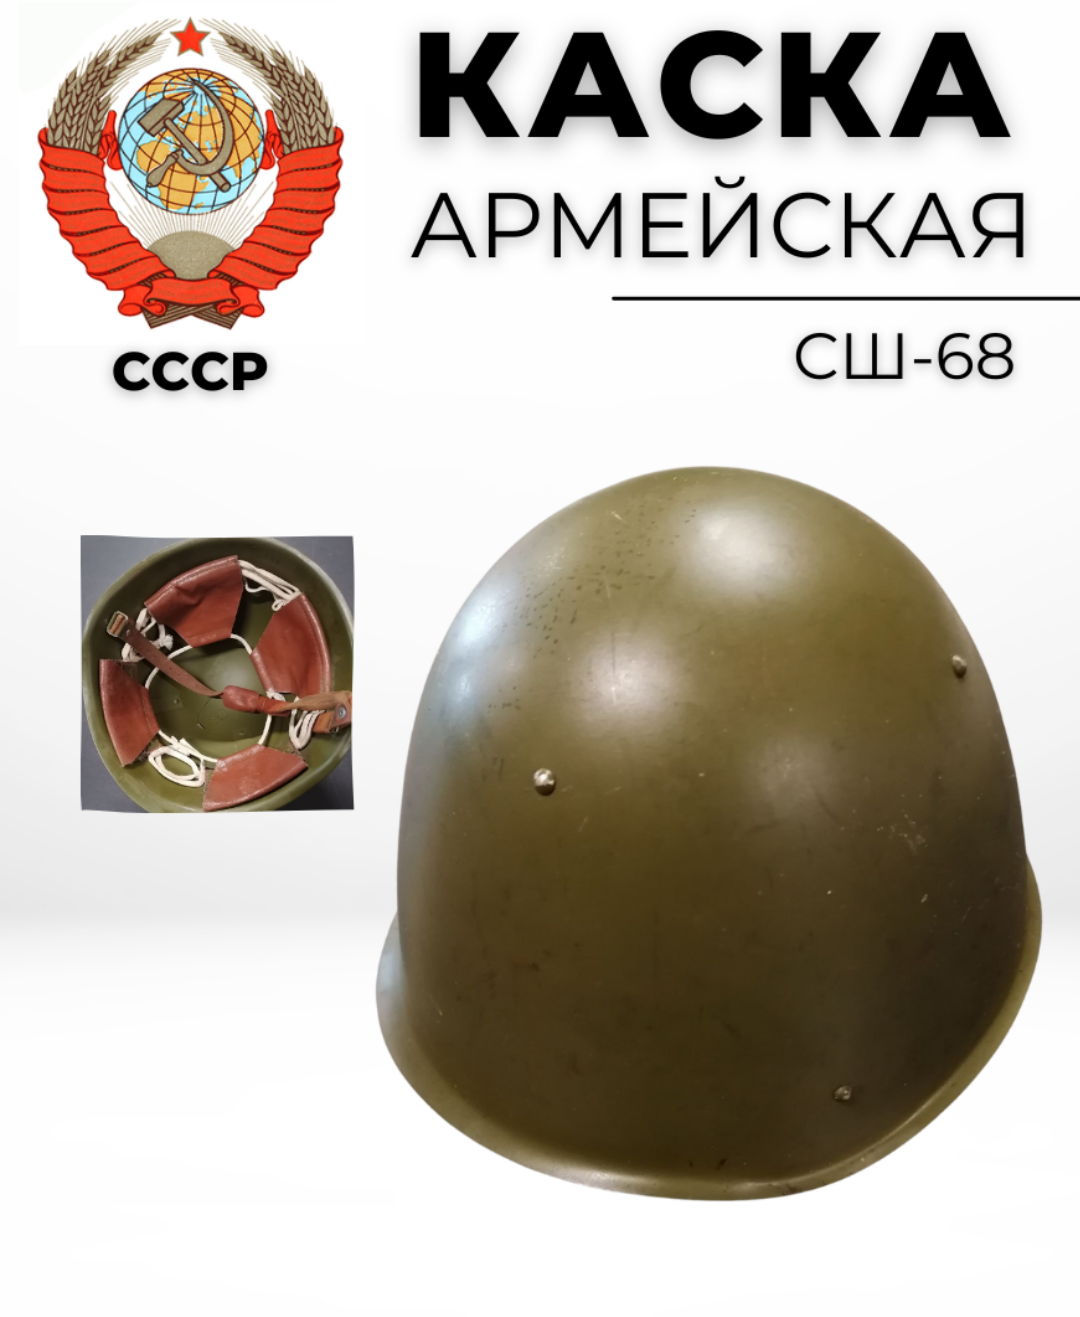 Каска армейская защитная СШ-68 военная